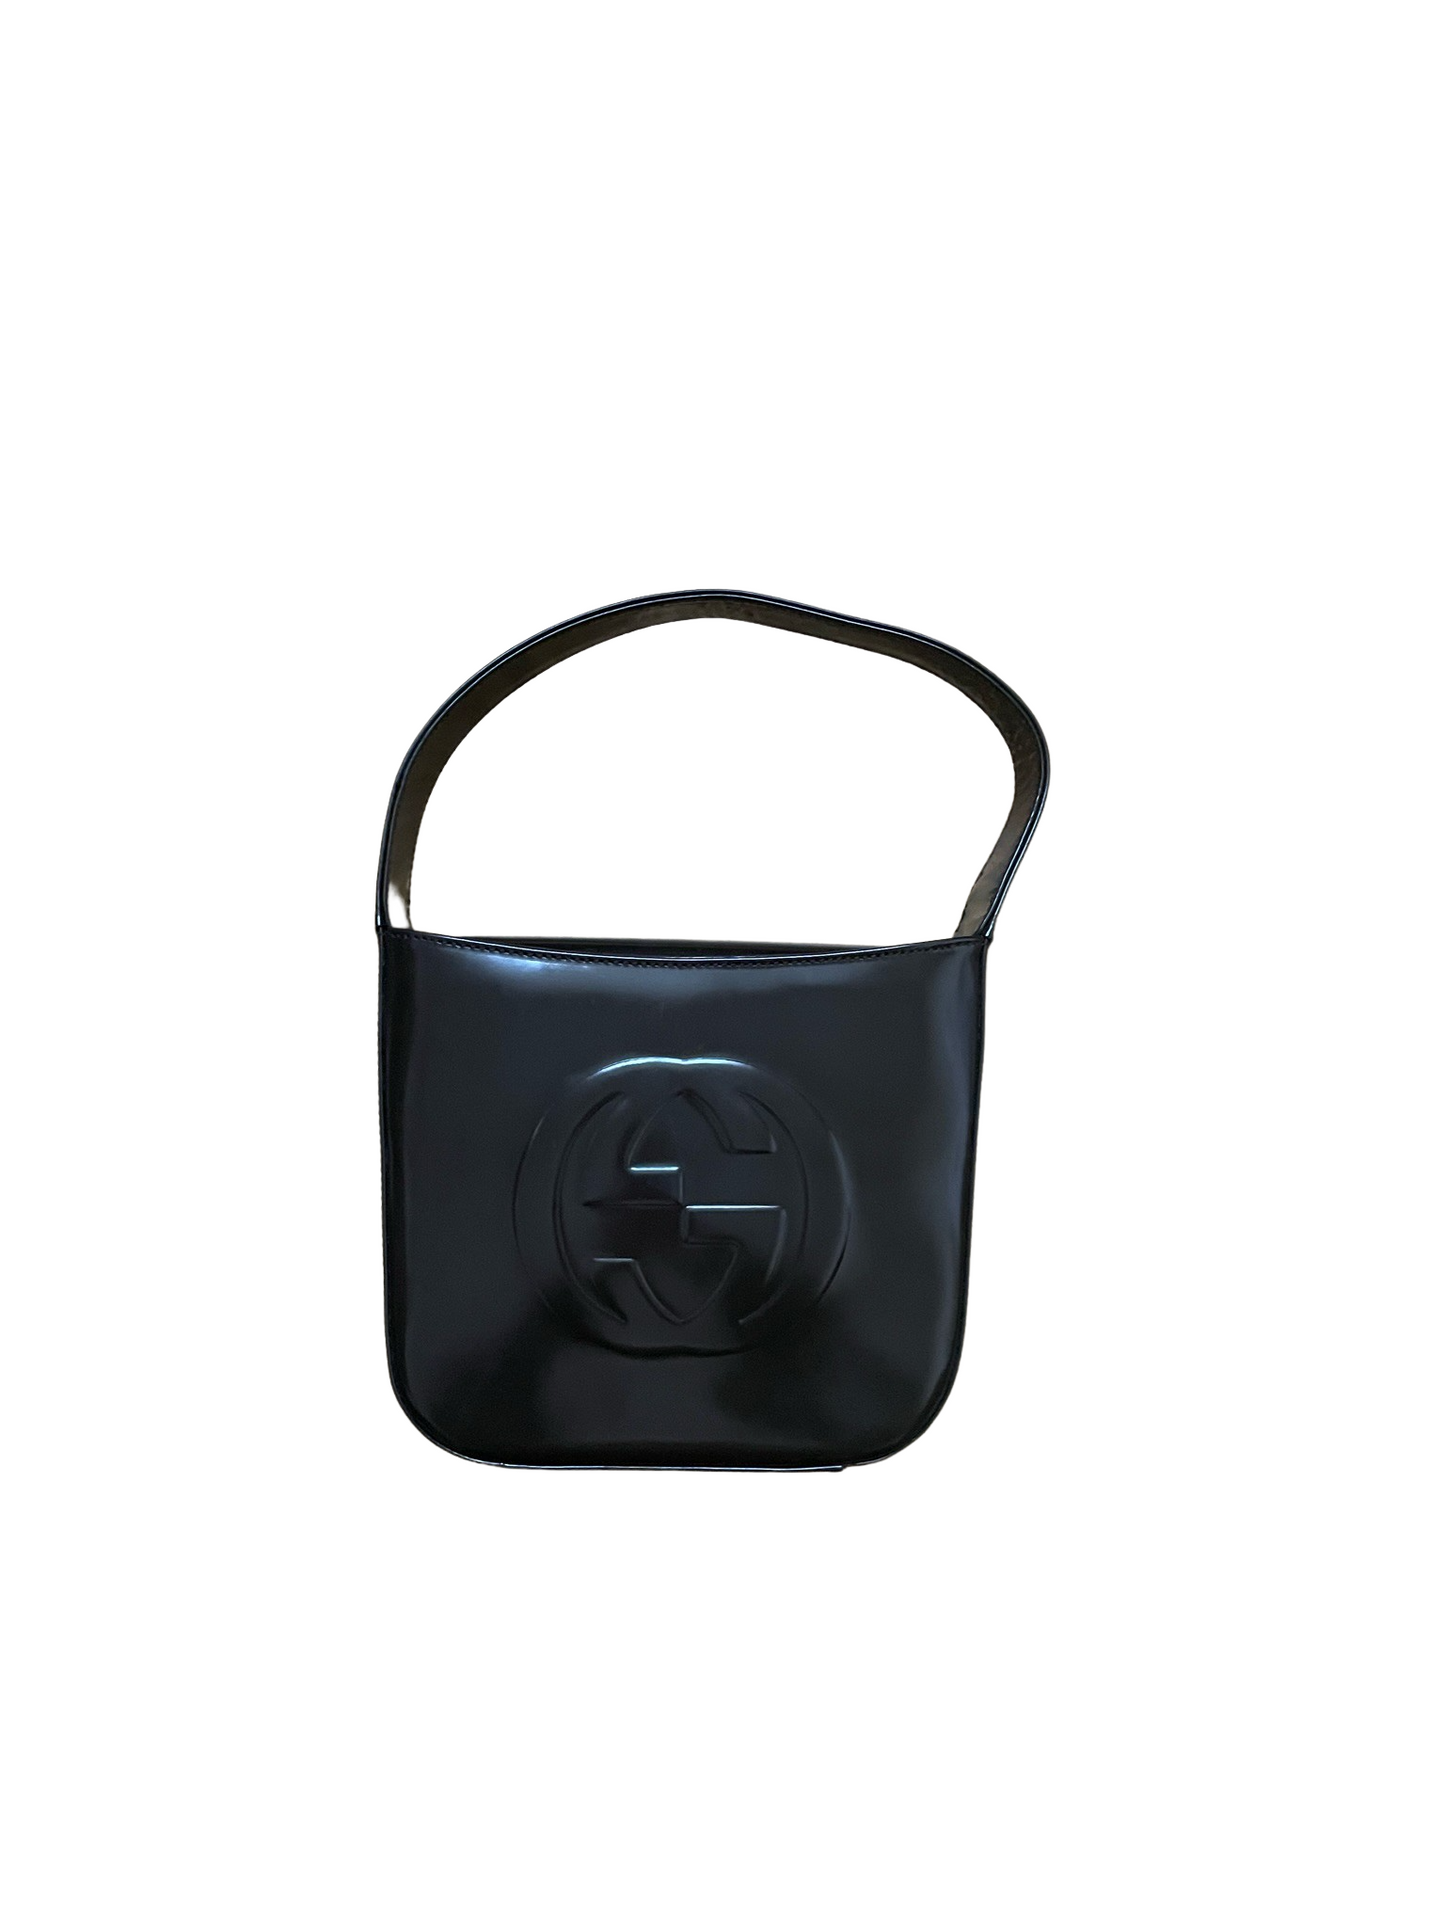 Gucci Dark Brown Patent Leather Handbag